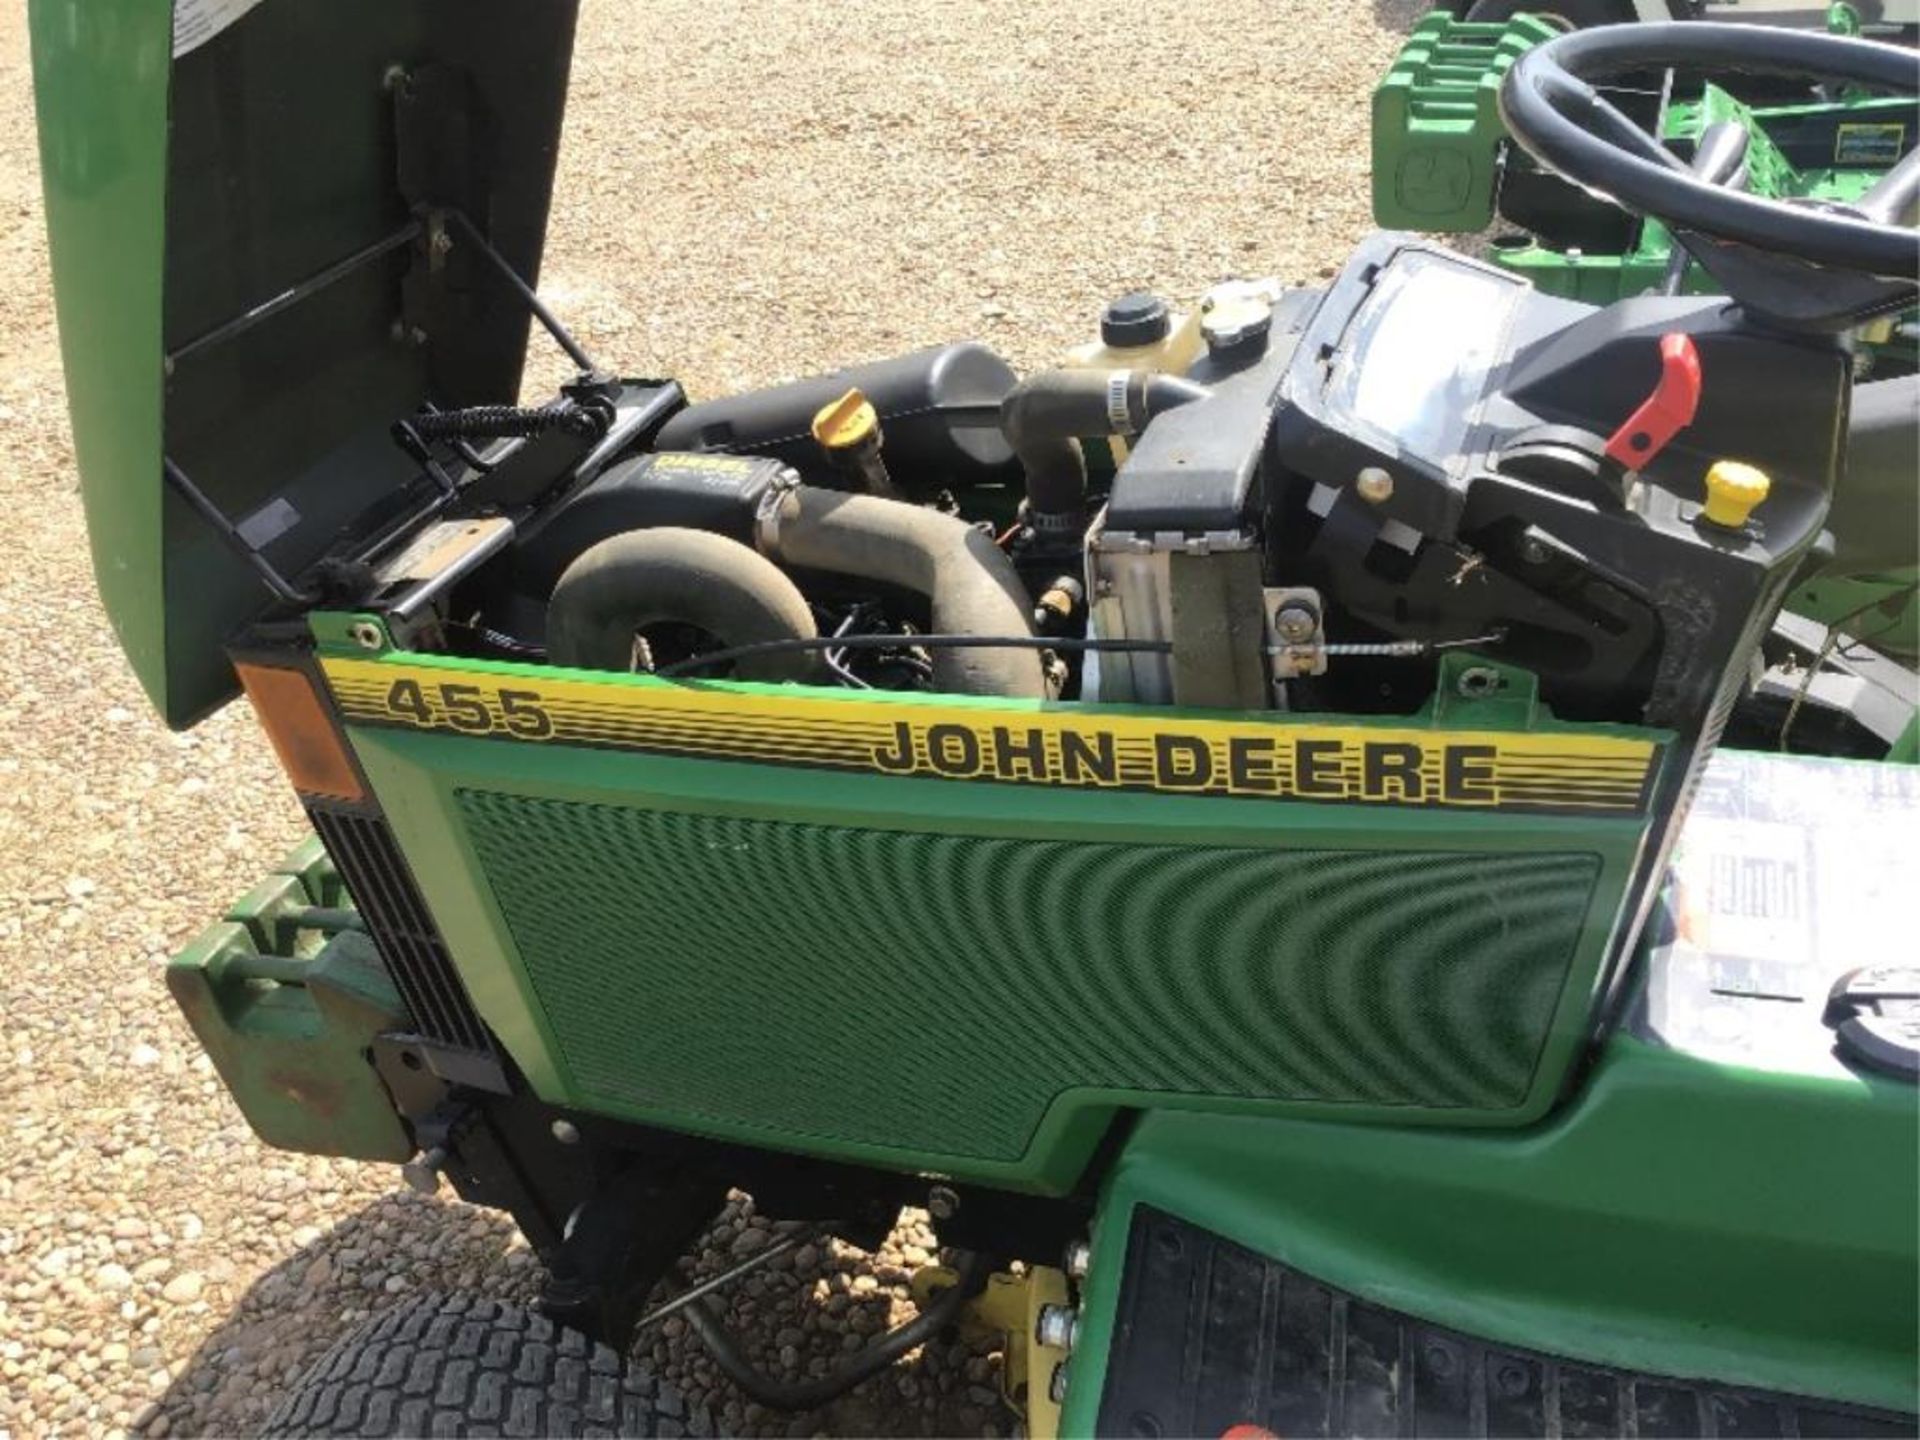 "1996 John Deere 455 Hydrostatic Drive Lawn Mower Tractor - Image 8 of 8